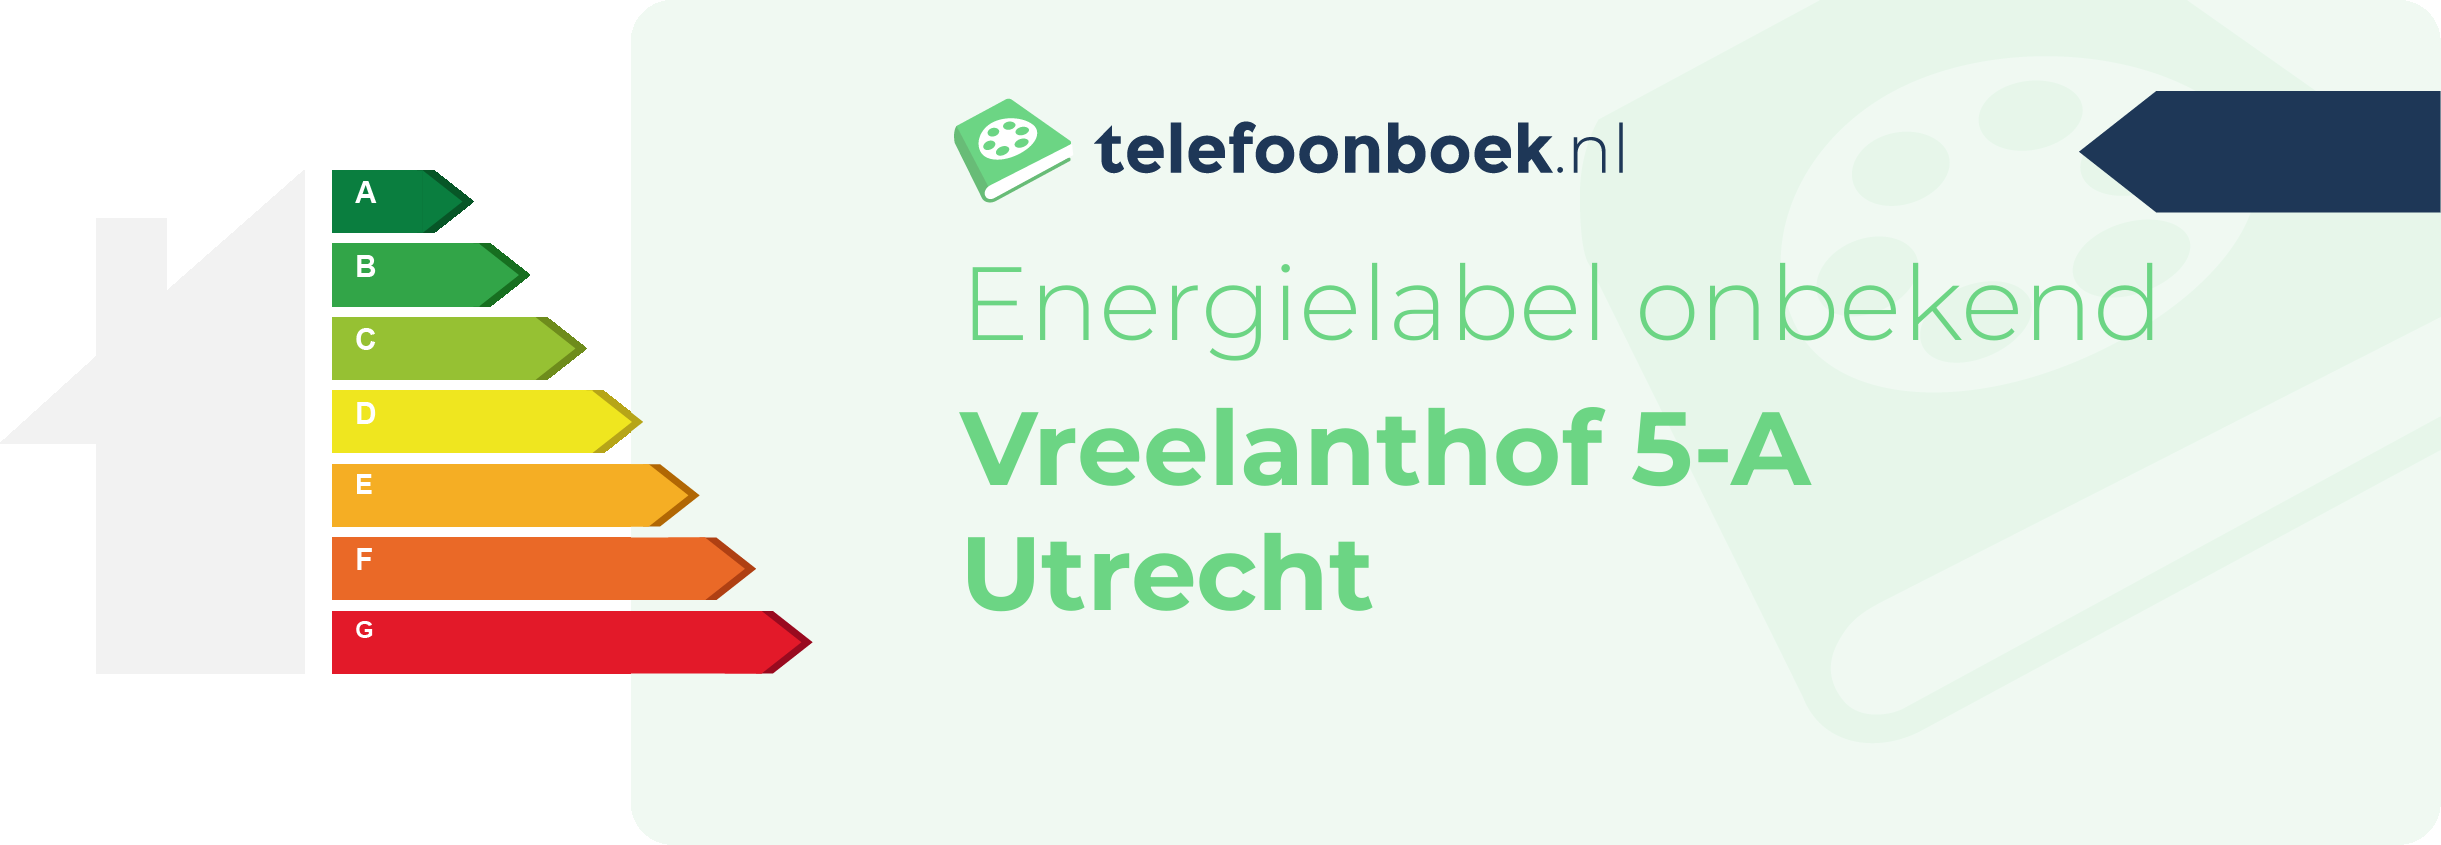 Energielabel Vreelanthof 5-A Utrecht